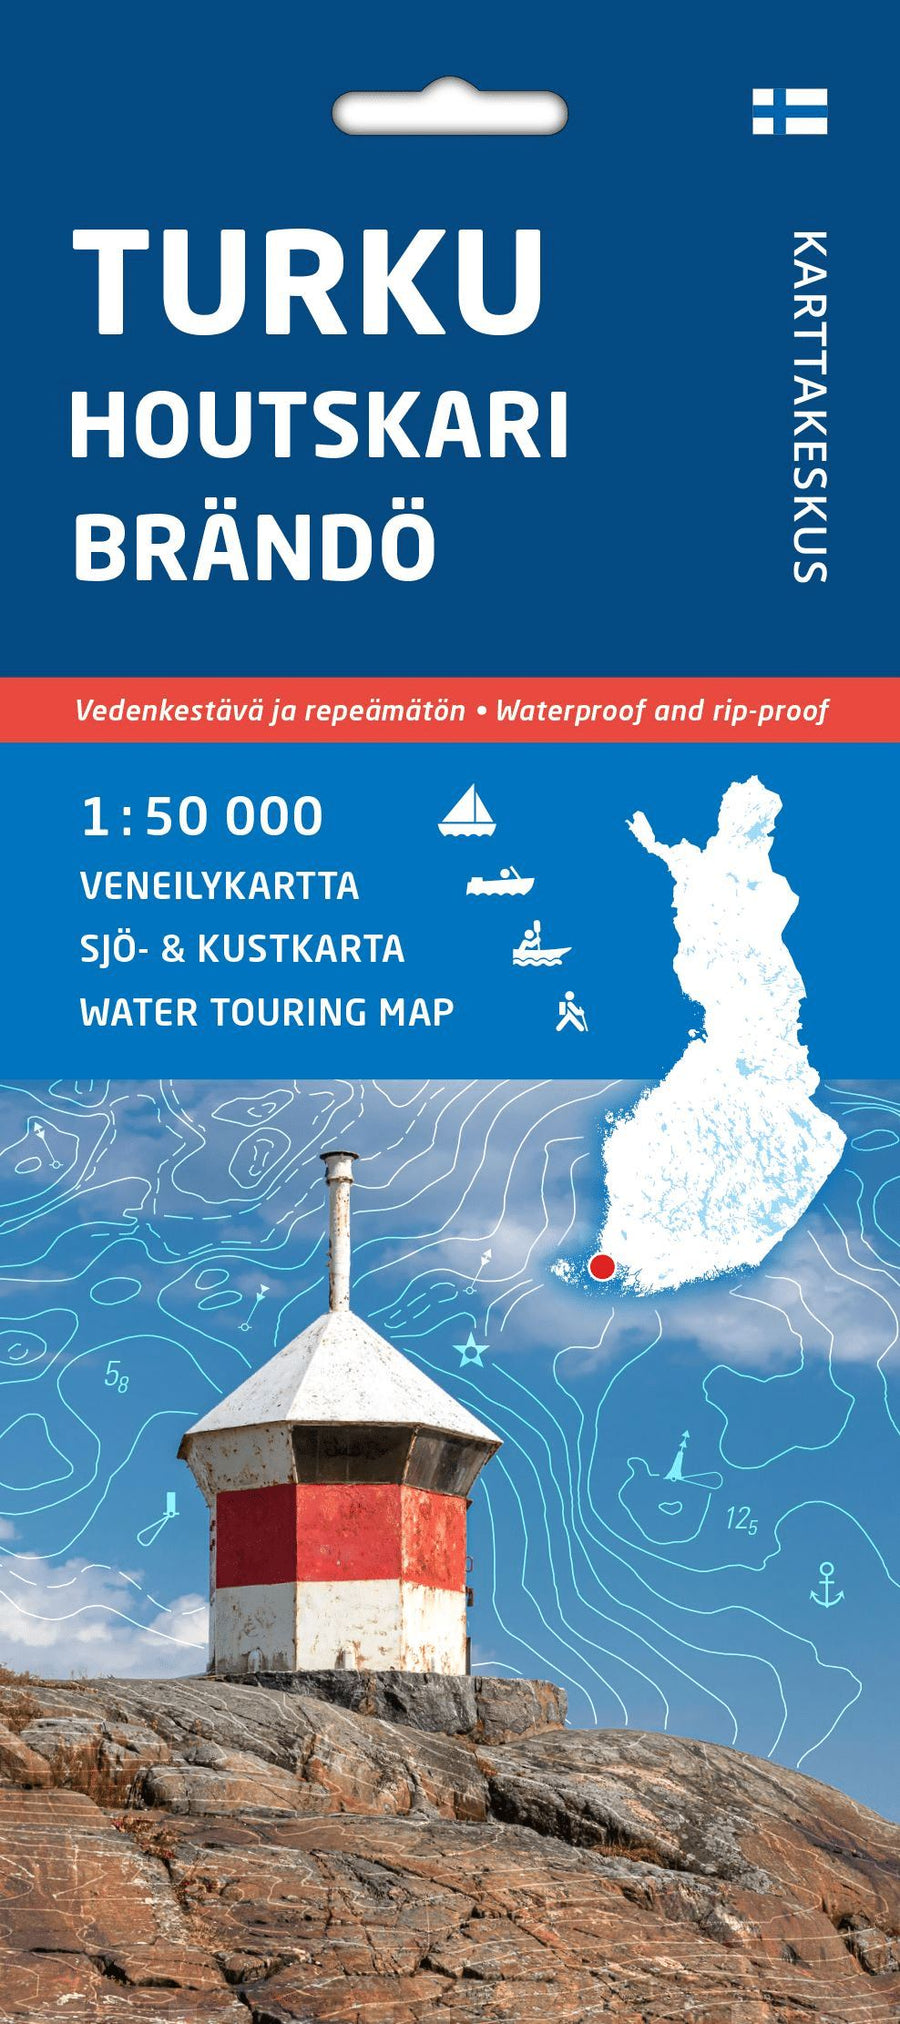 Carte marine n° 29 - Turku Houtskari Brändö veneilykartta (Finlande) | Karttakeskus carte pliée Karttakeskus 